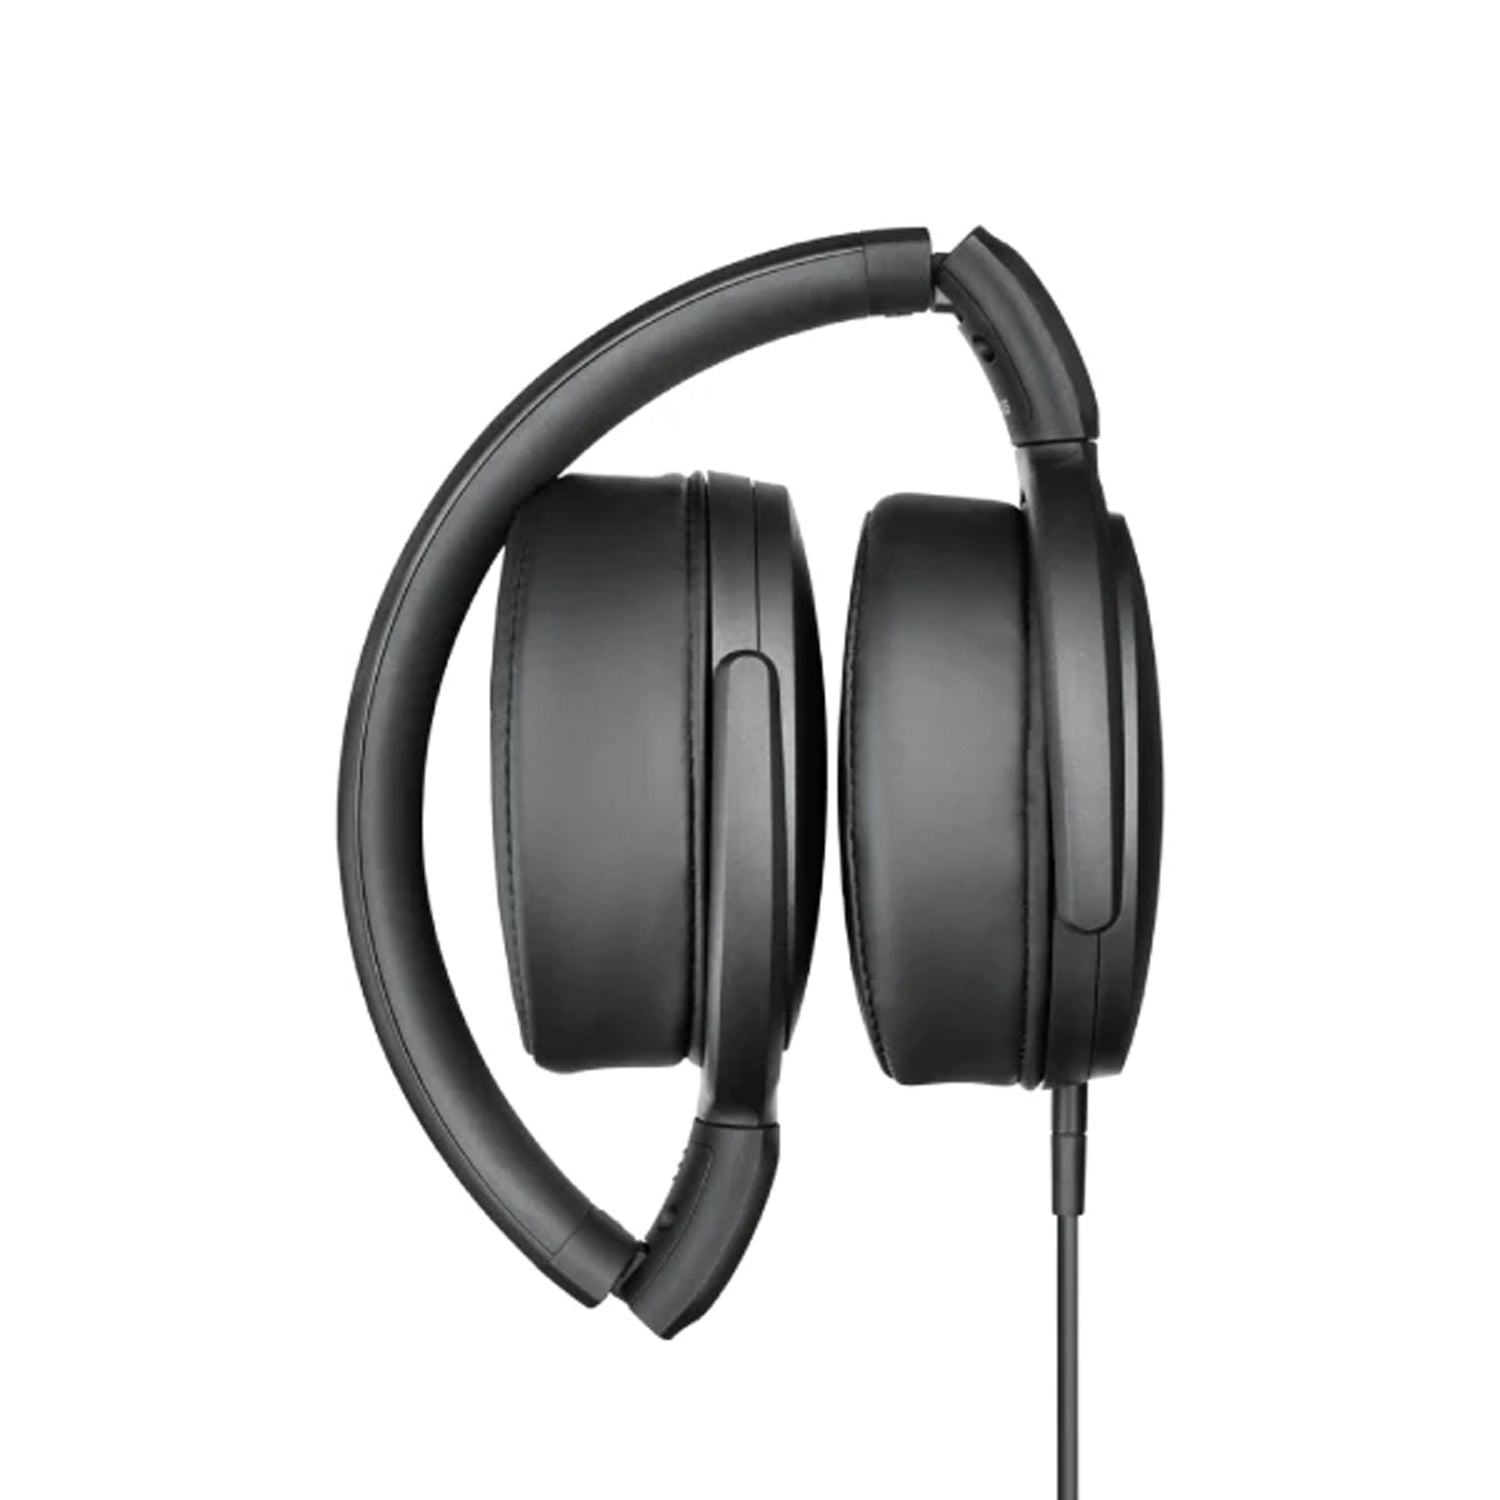 Sennheiser HD 400S Over-Ear Headphones with Microphone